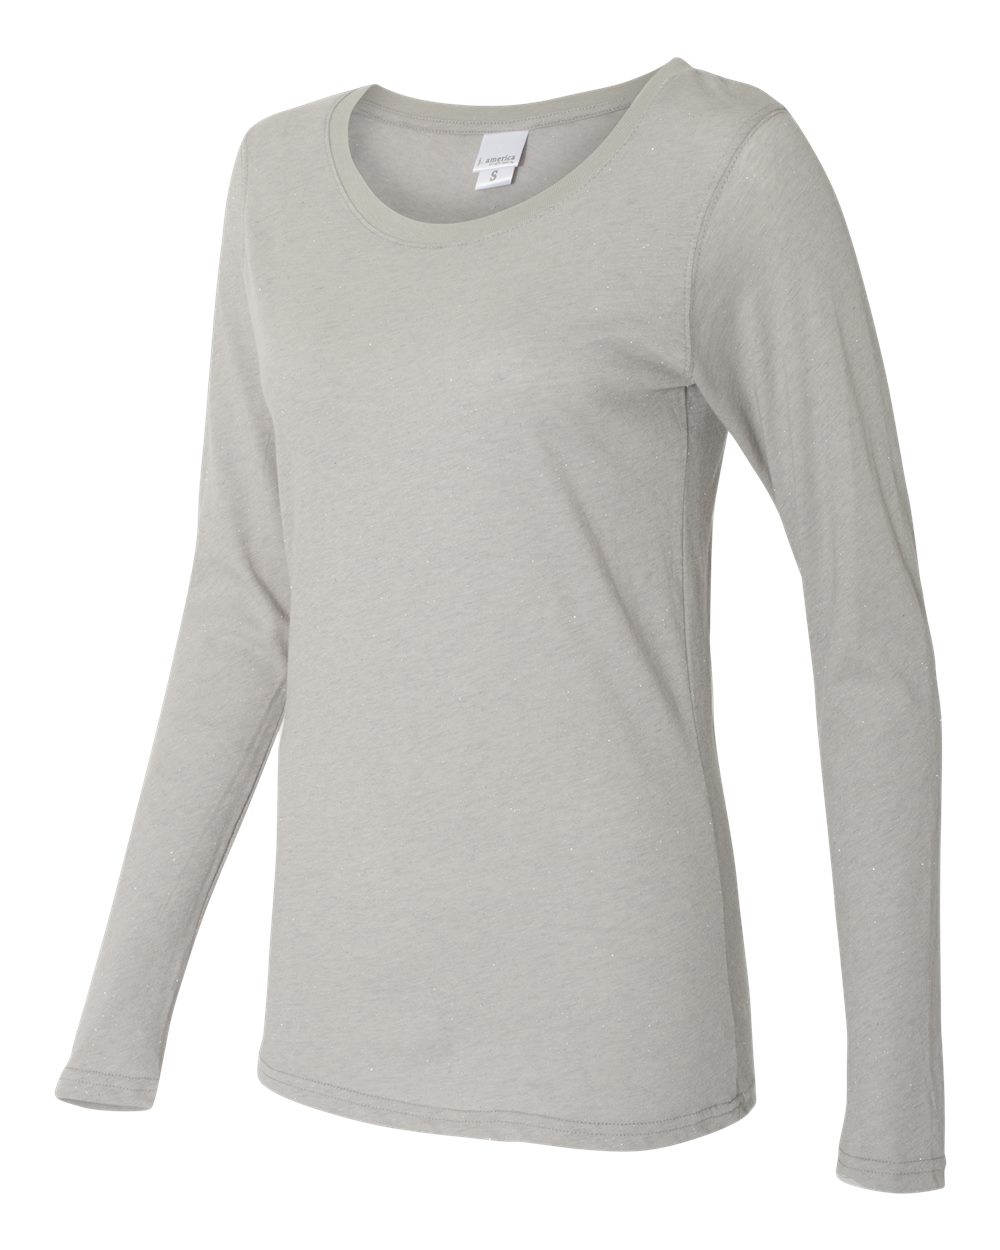 J.America 8236 - Women's Glitter Long Sleeve T-Shirt